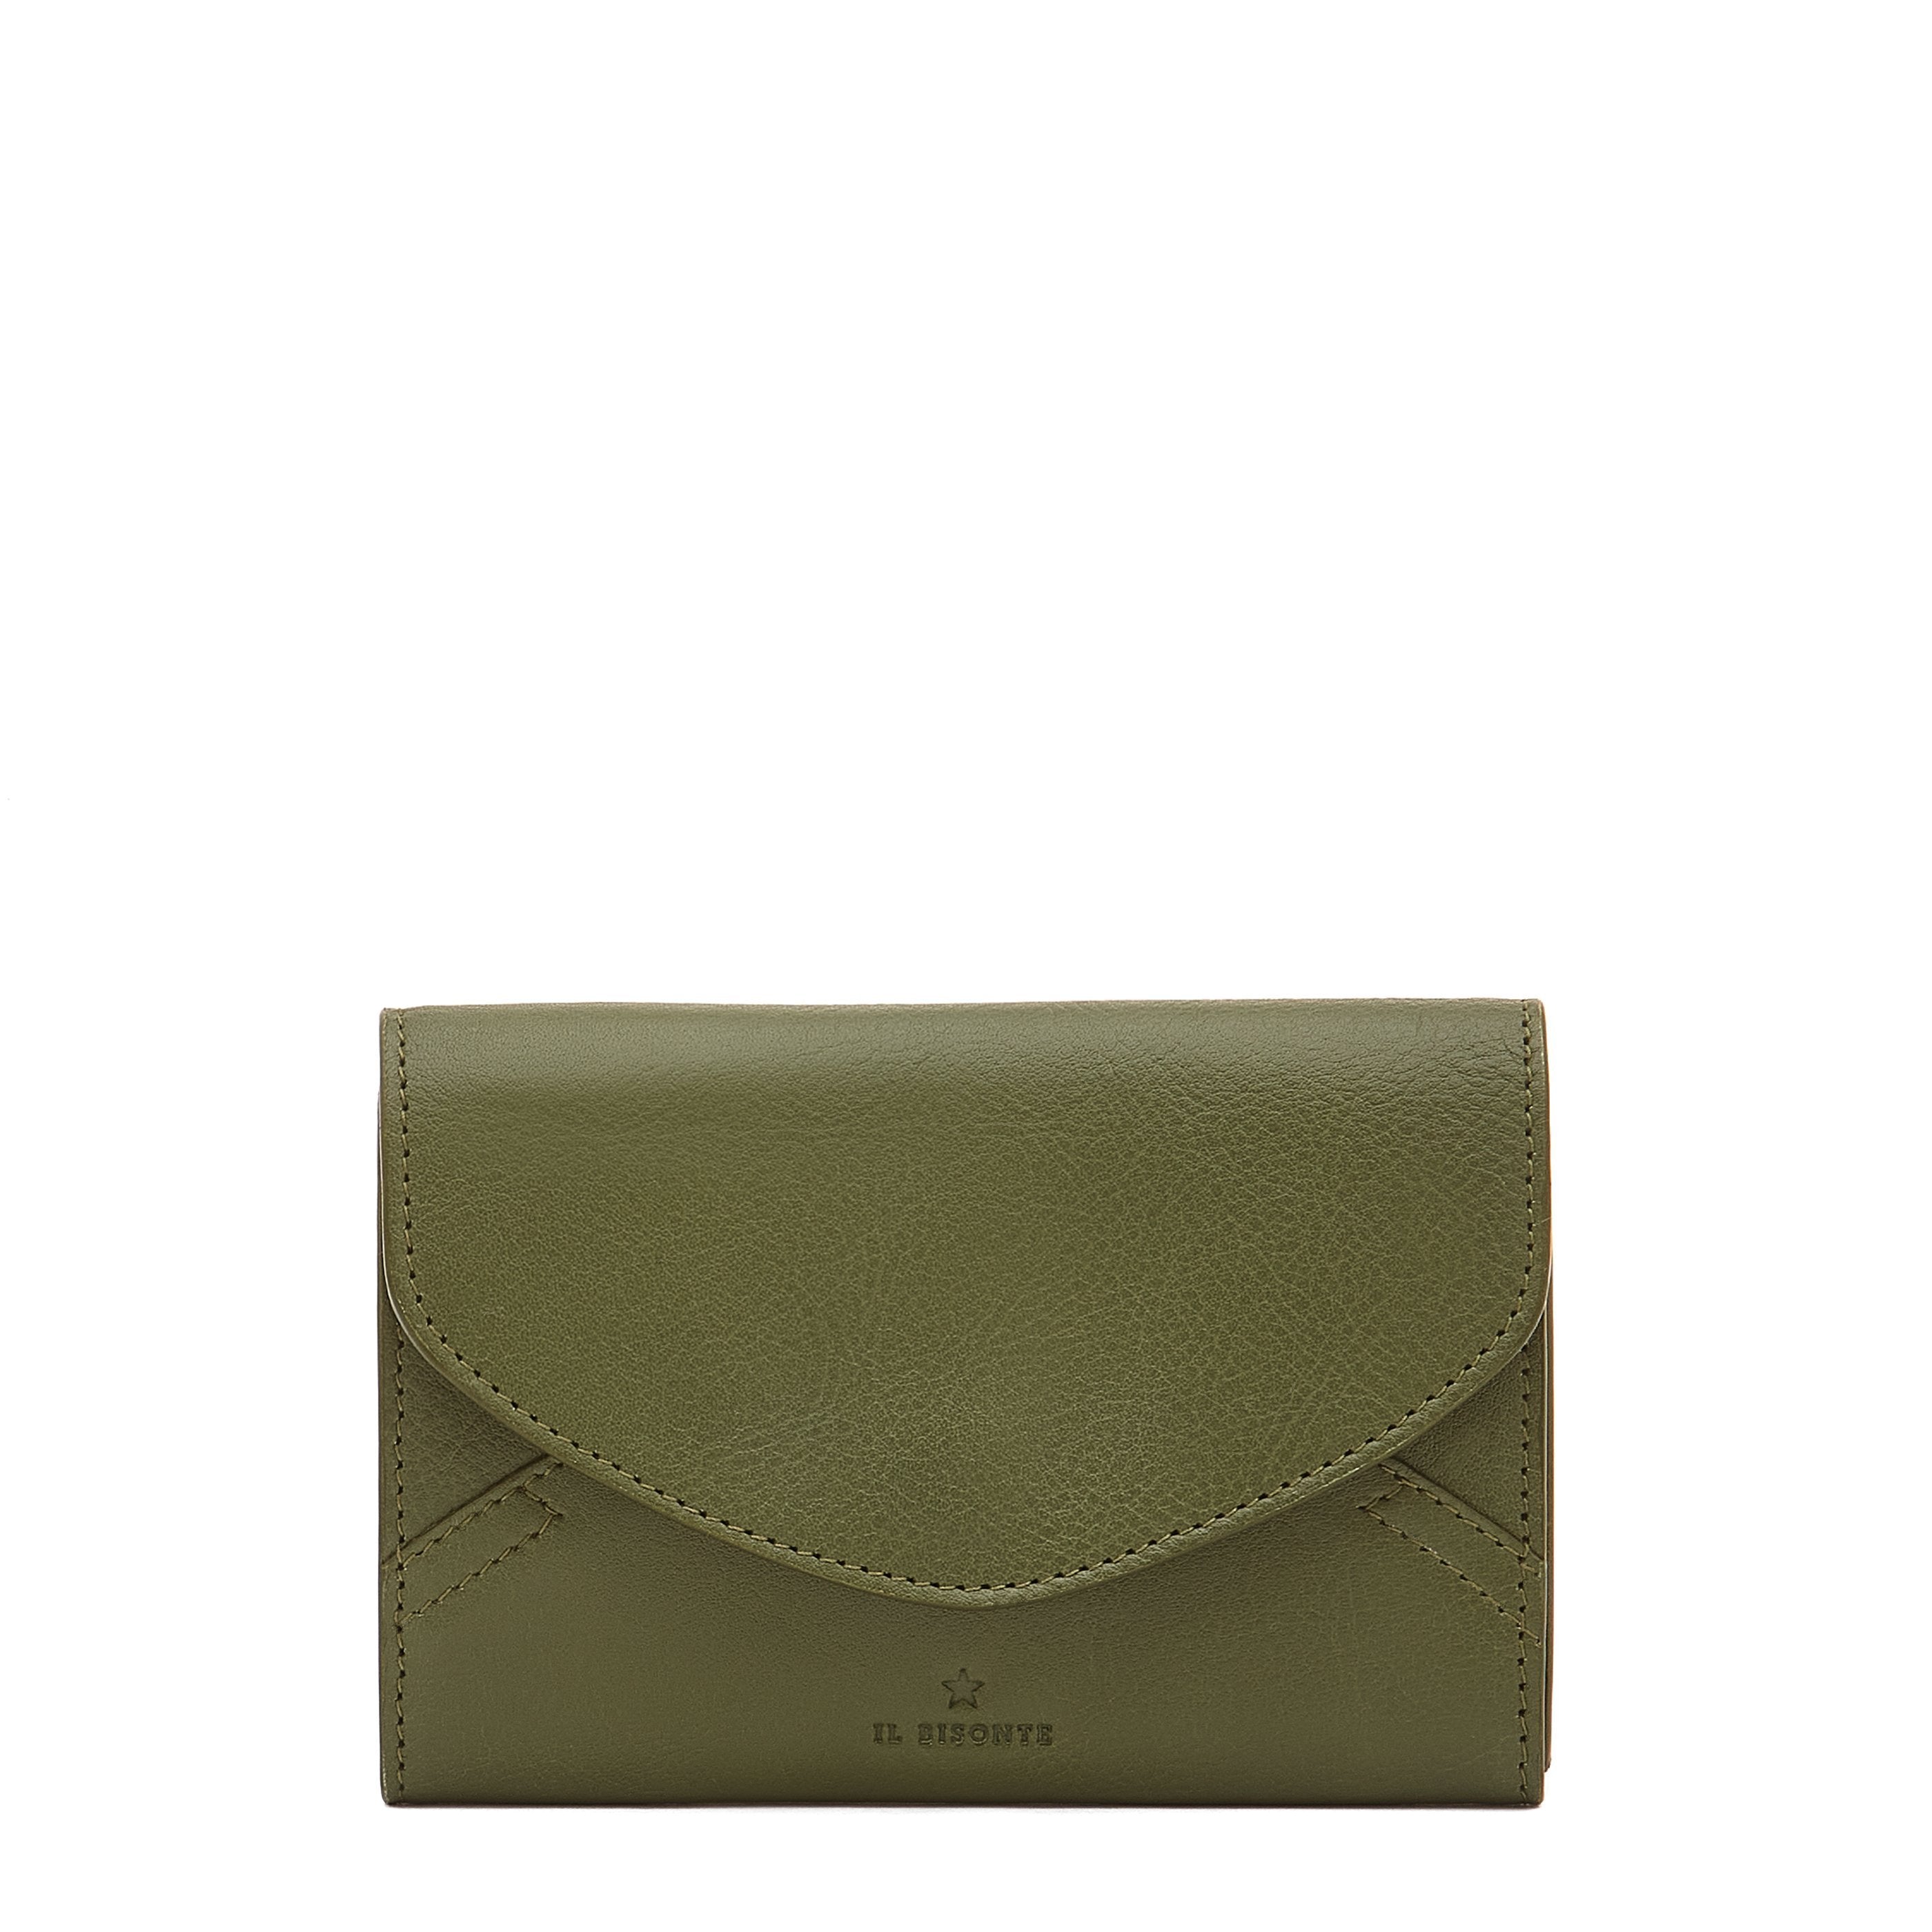 Esperia | Women's Wallet in Leather color Cypress